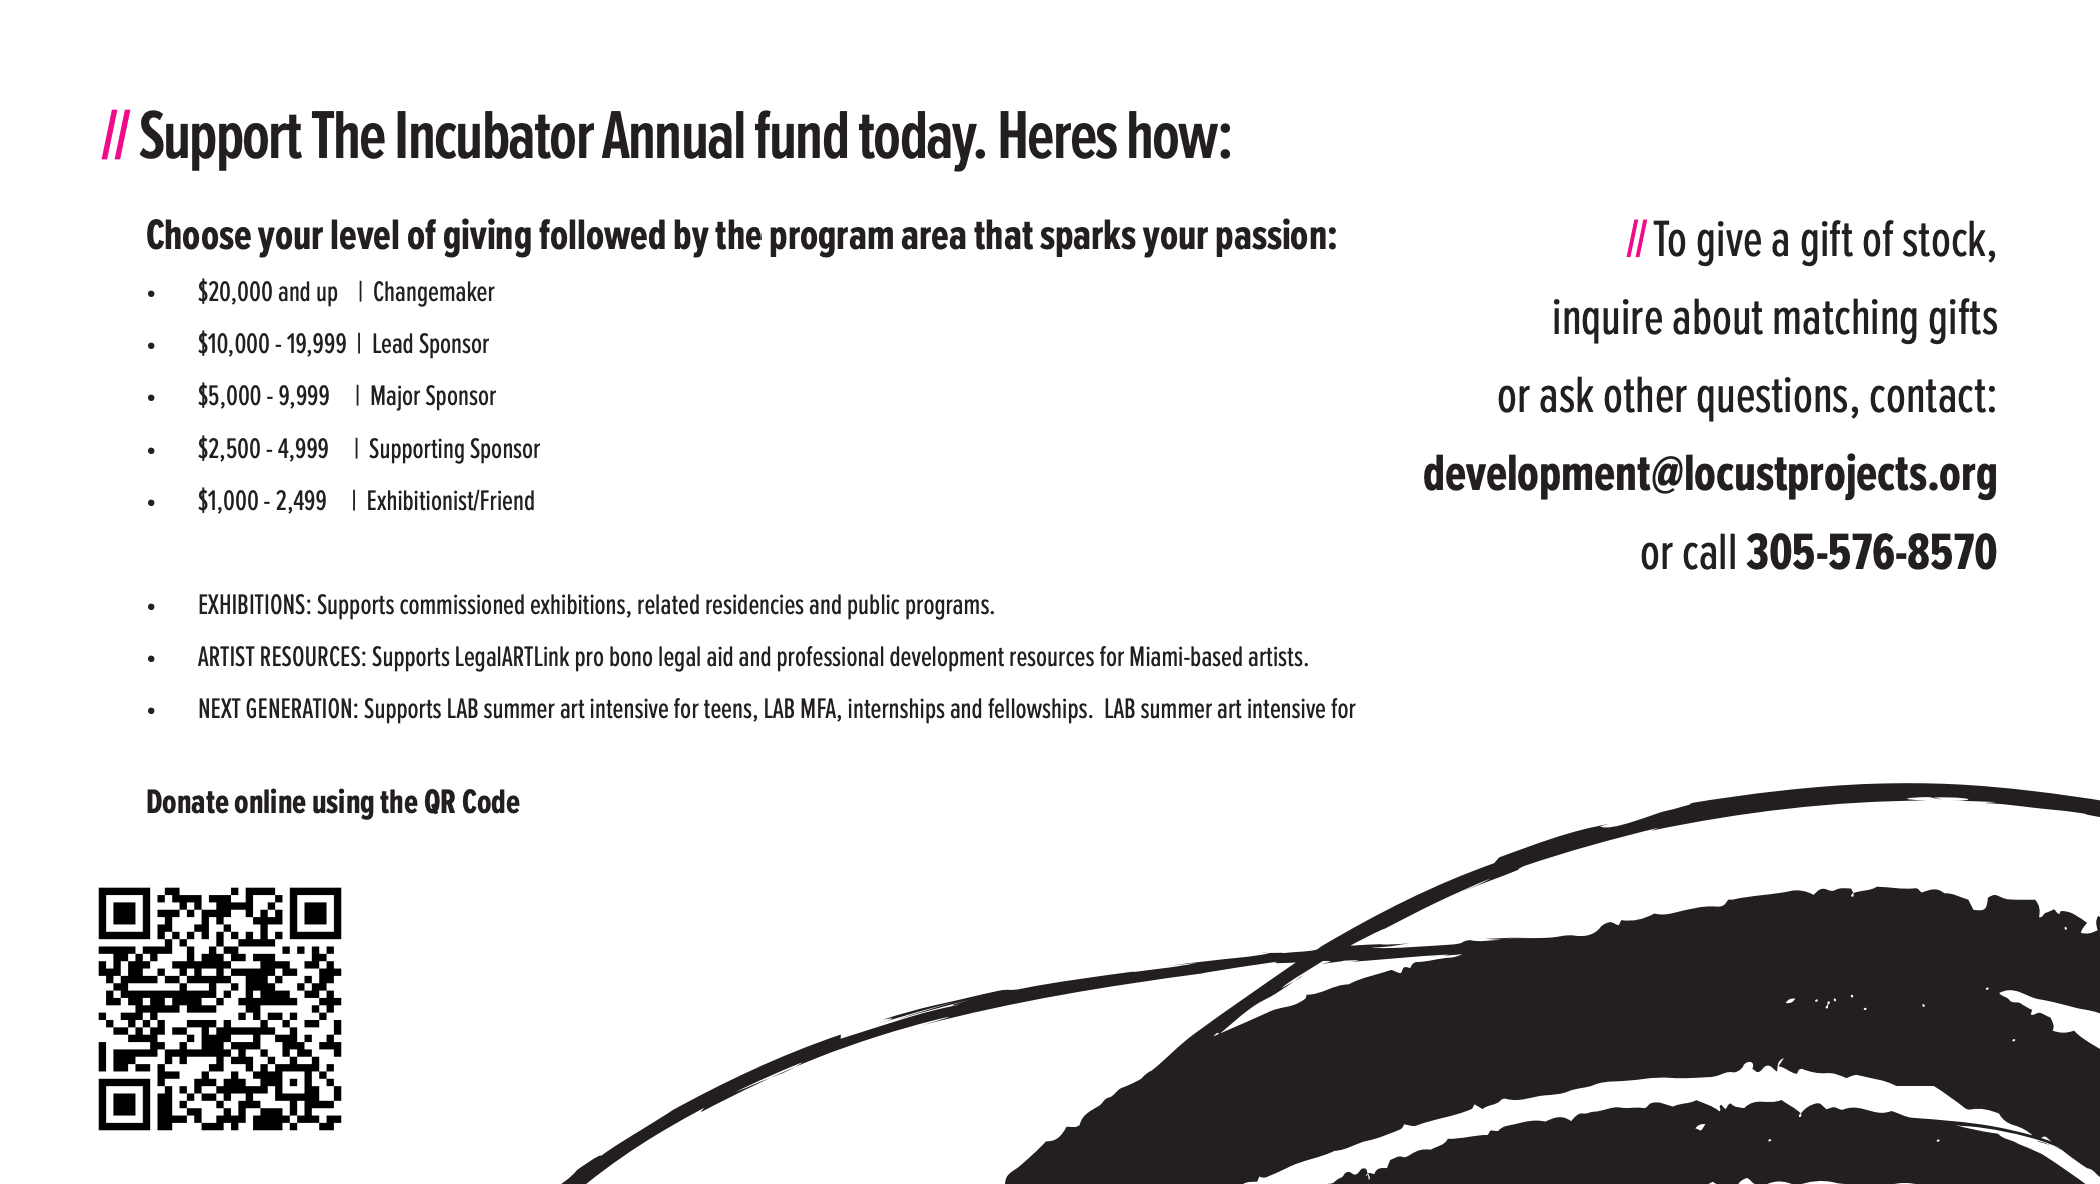 The Incubator Annual Fund